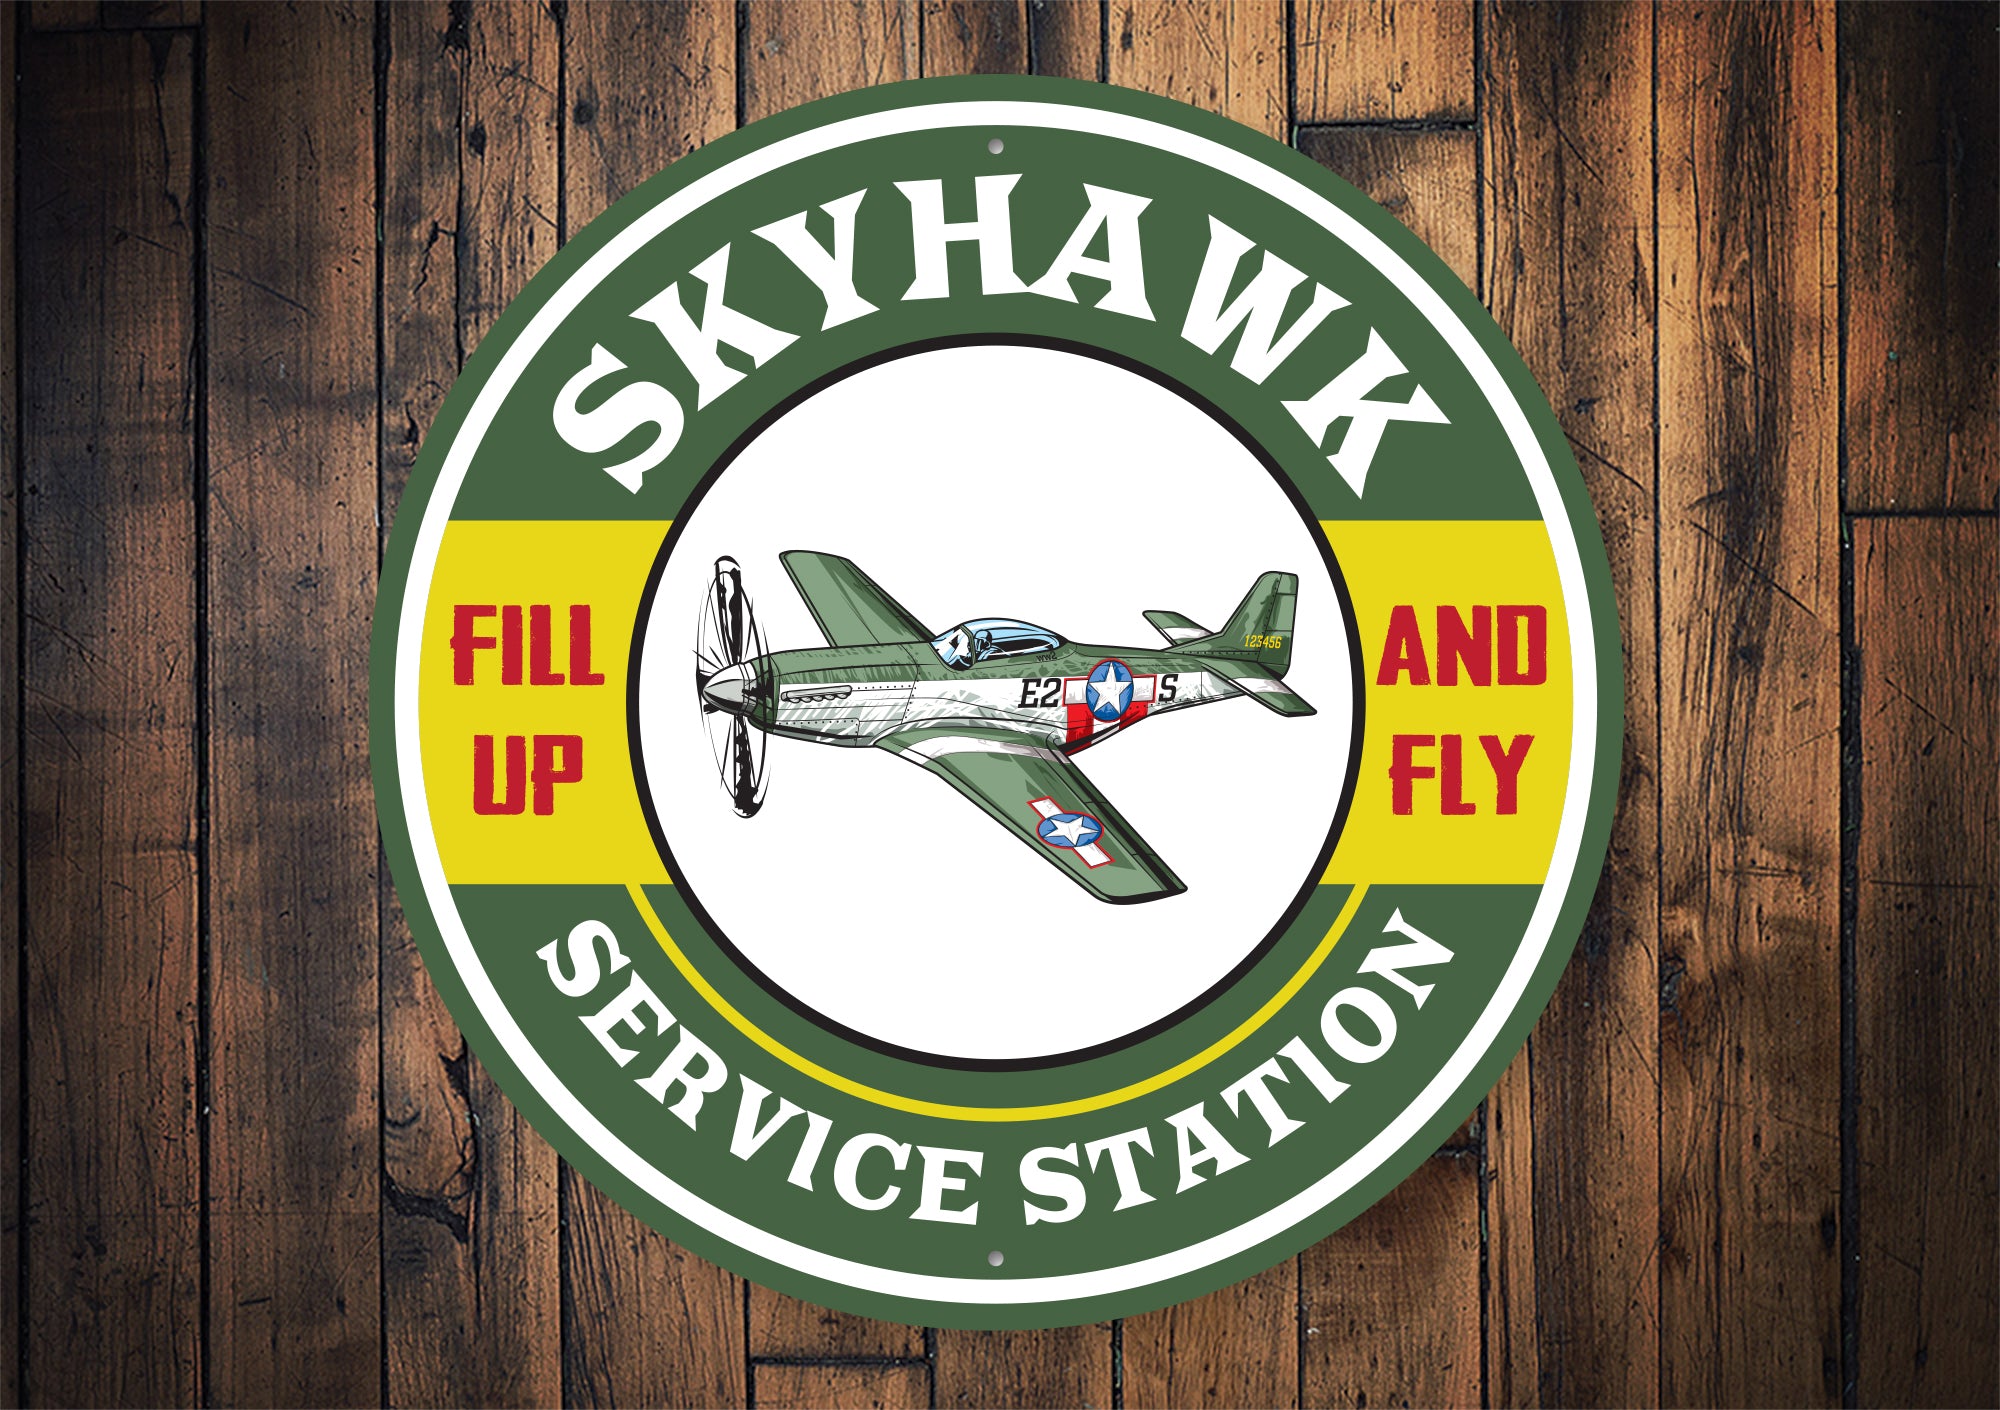 Skyhawk Service Station Sign